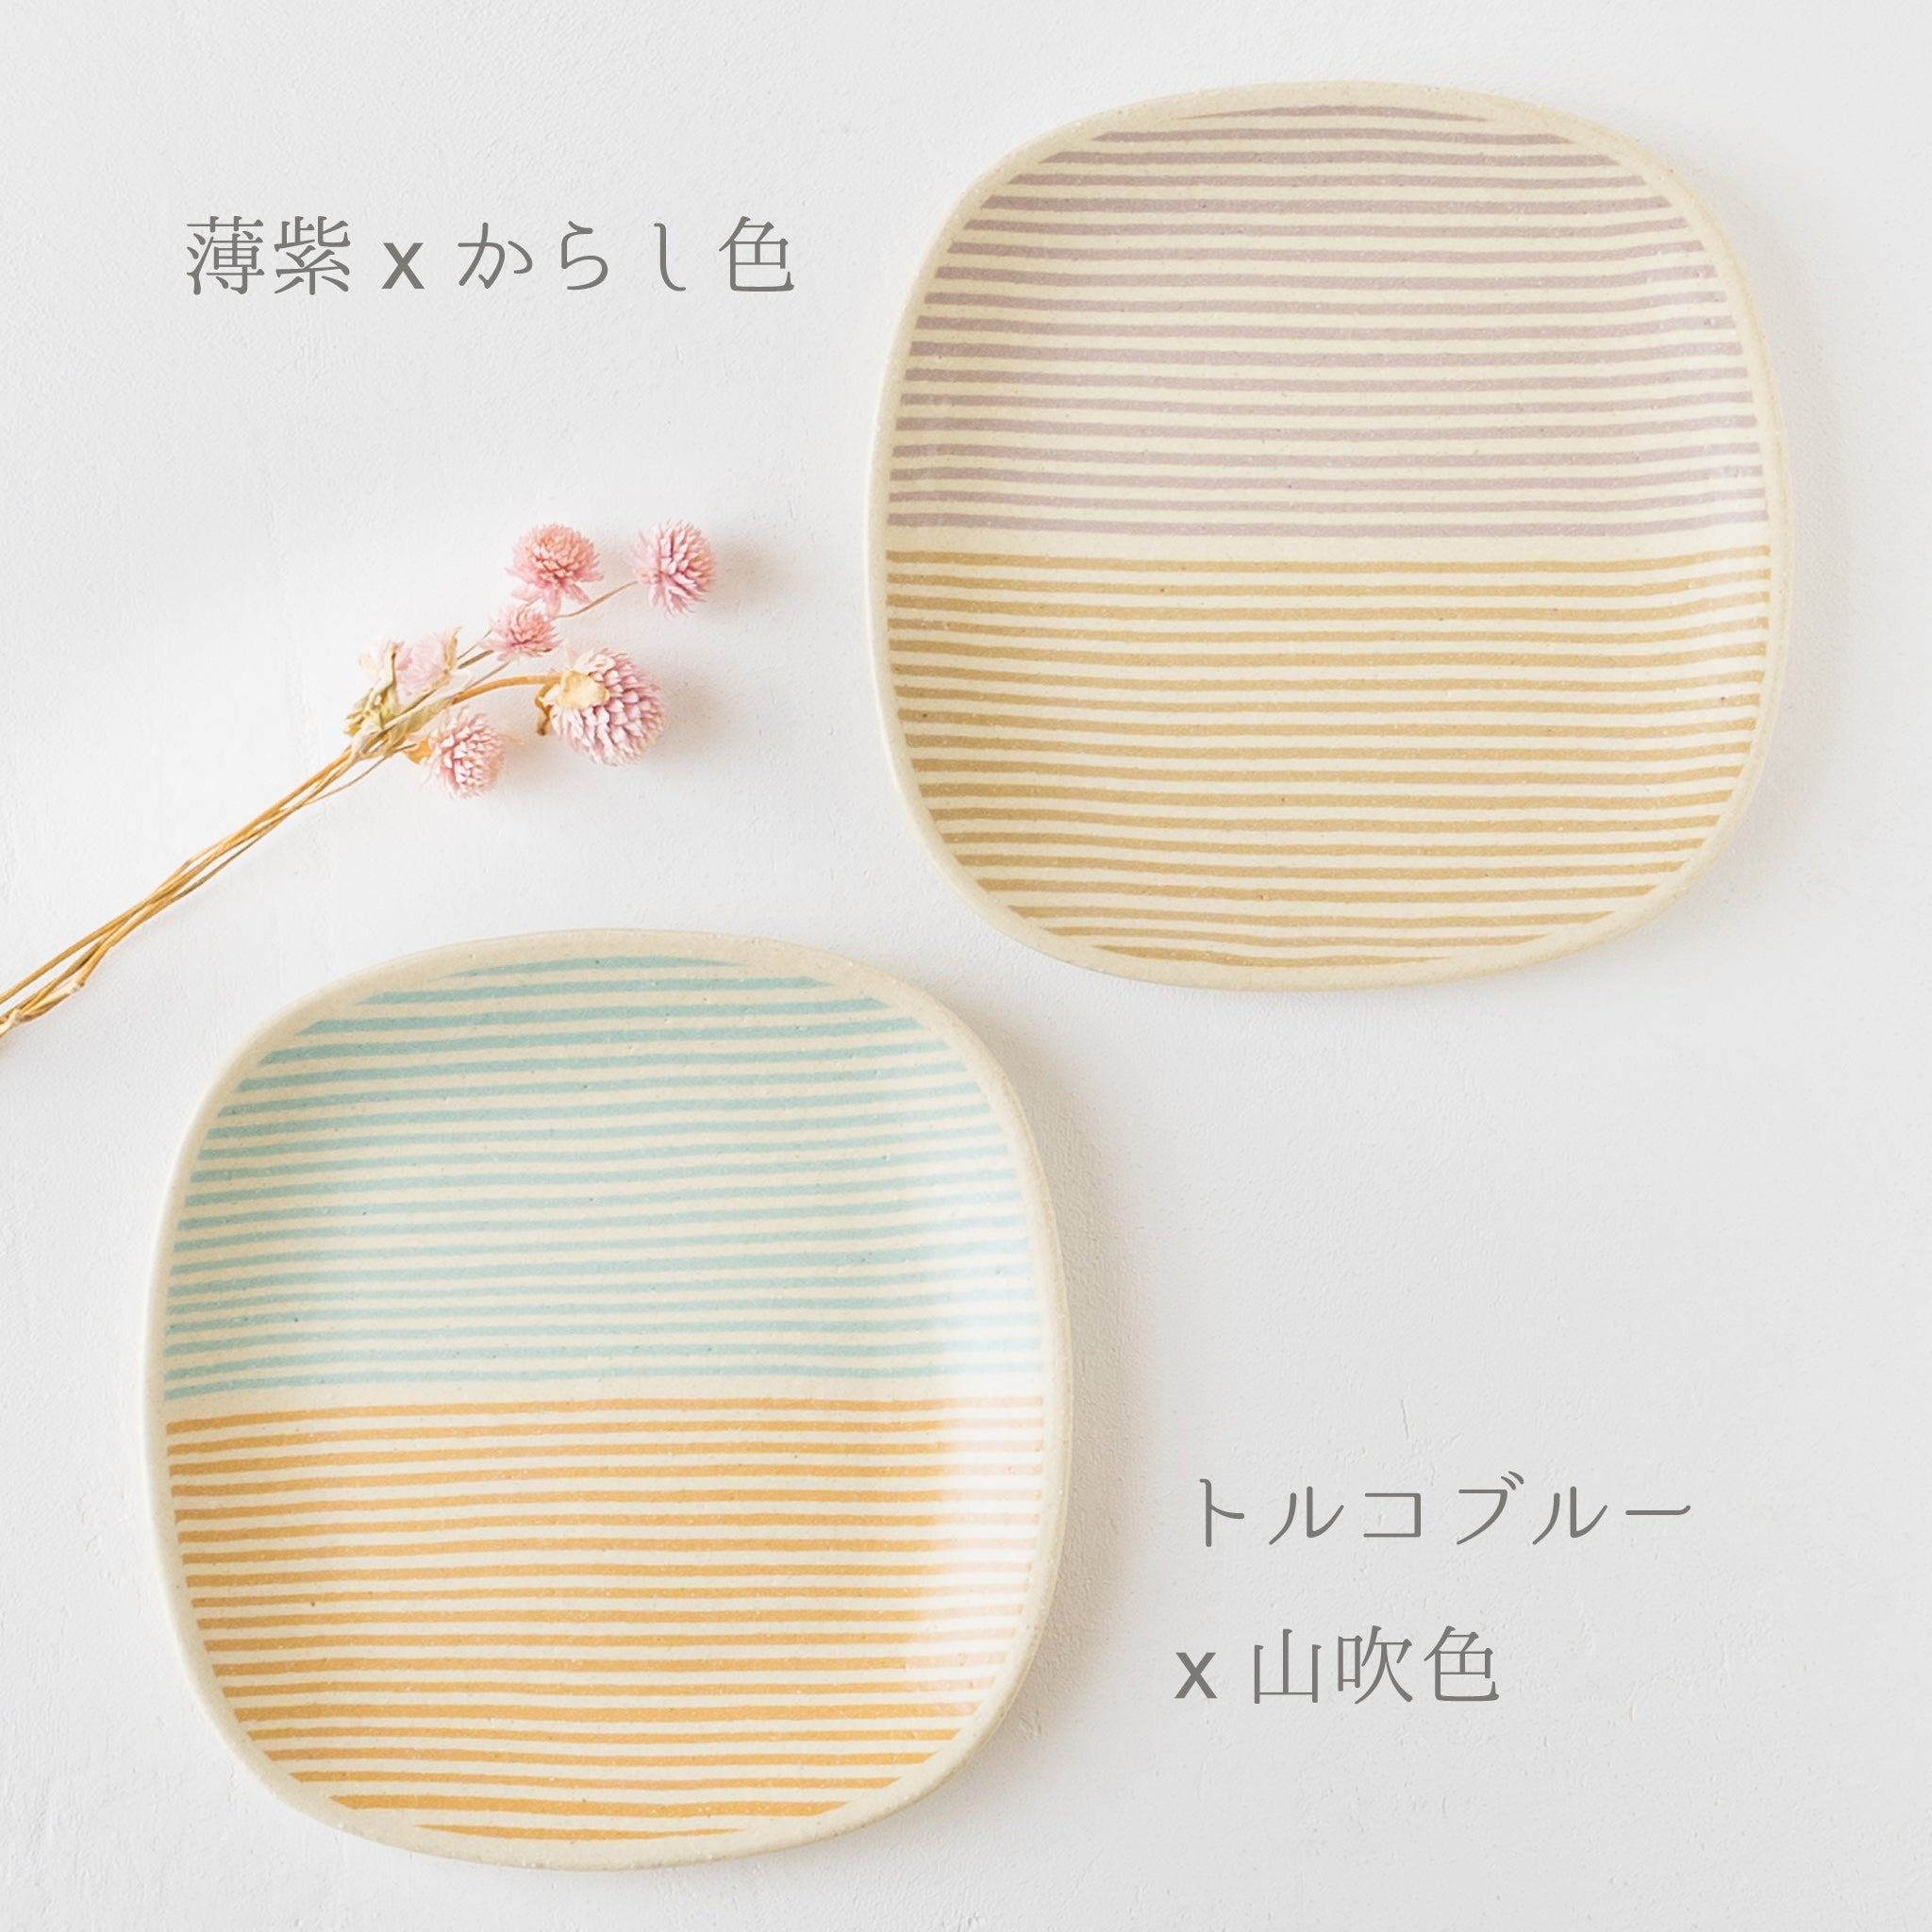 A warm and cute Hanako Sakashita's kneaded bread plate